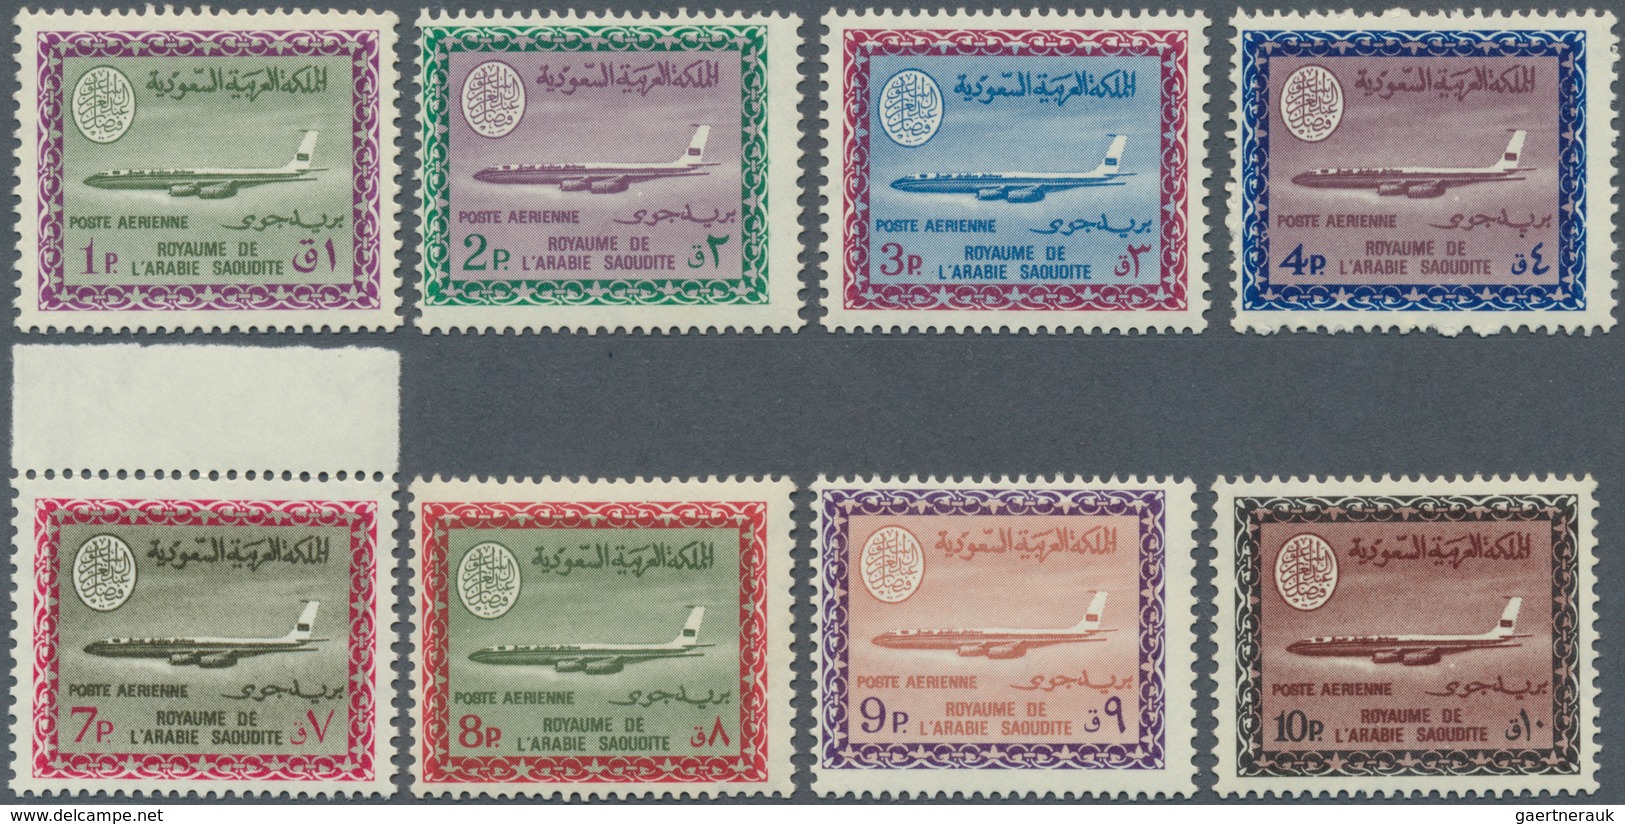 Saudi-Arabien: 1967/71, Airmail 1 Pia.-10 Pia. With Wmk. 2, Mint Never Hinged MNH (SG 806/14, Scott - Saudi-Arabien